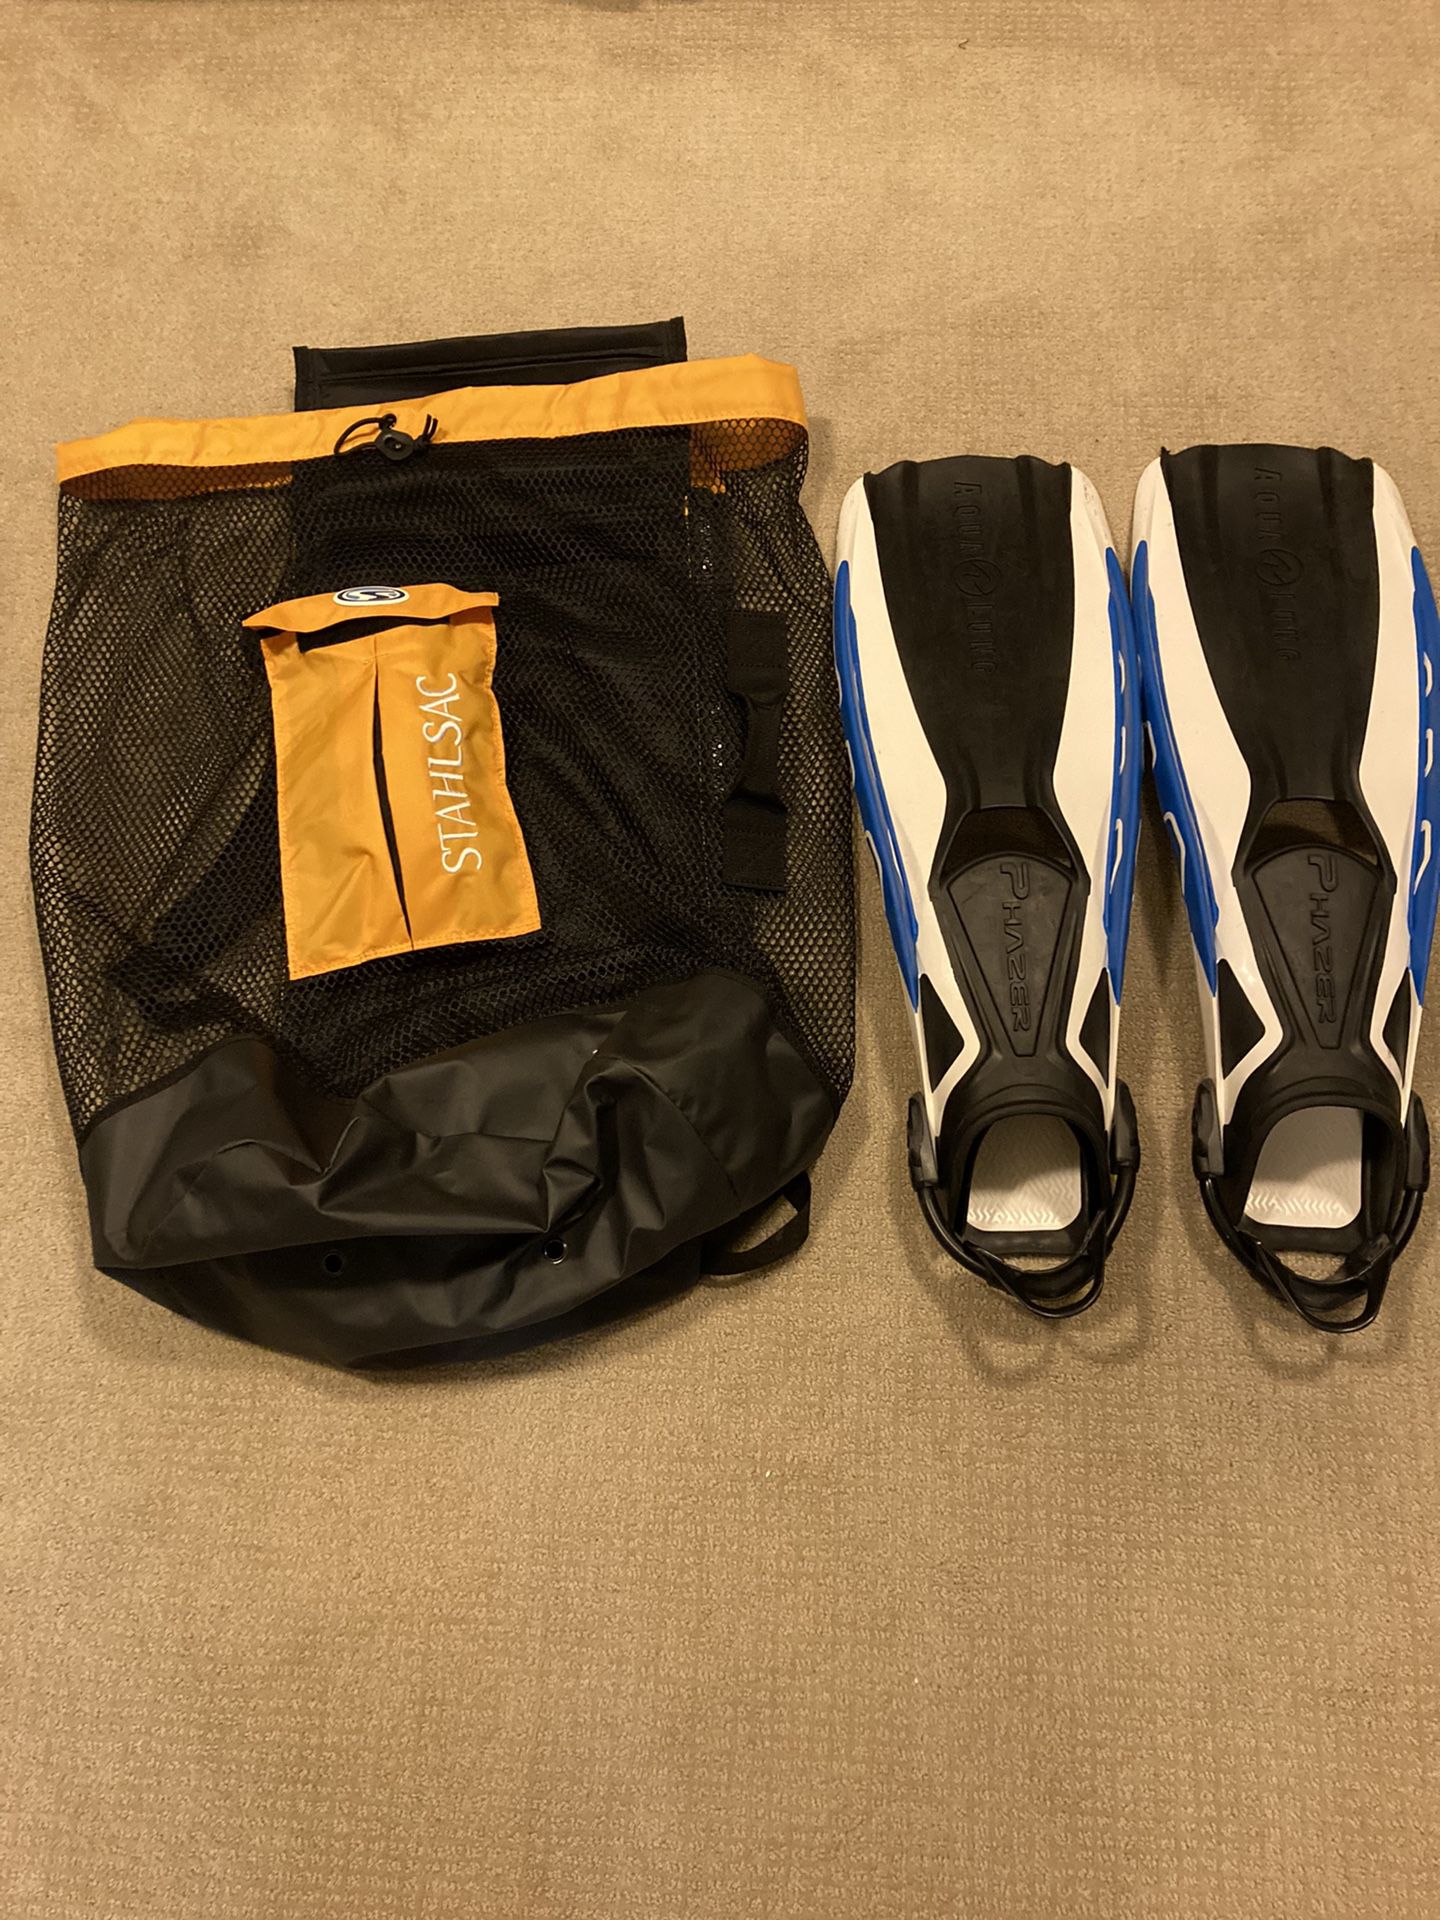 Aqua Lung Phazer Fins And  Stahlsac Bonair Mesh backpack